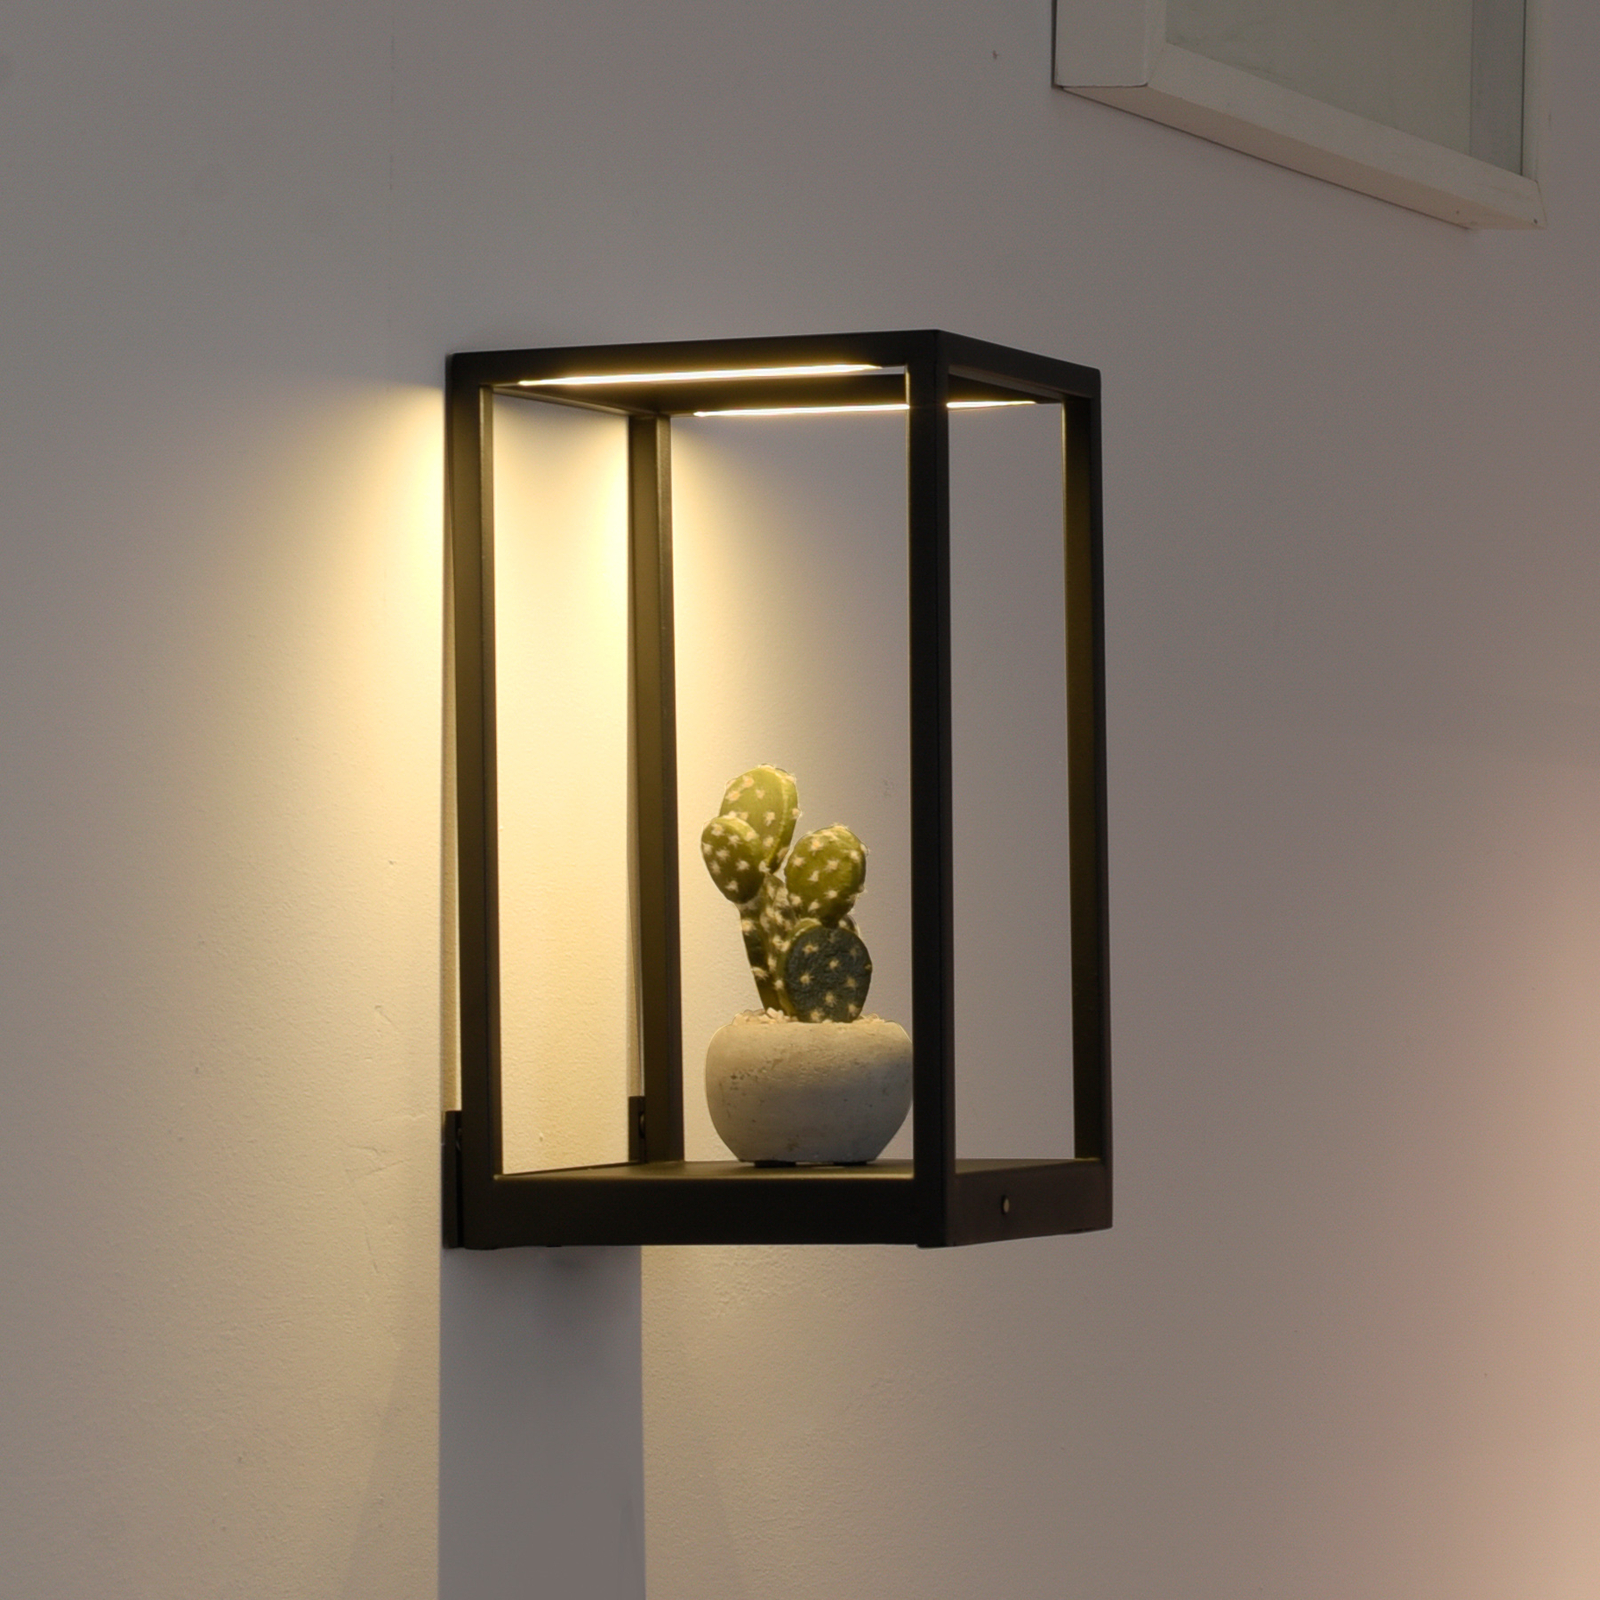 Paul Neuhaus Contura LED-vegglampe i svart